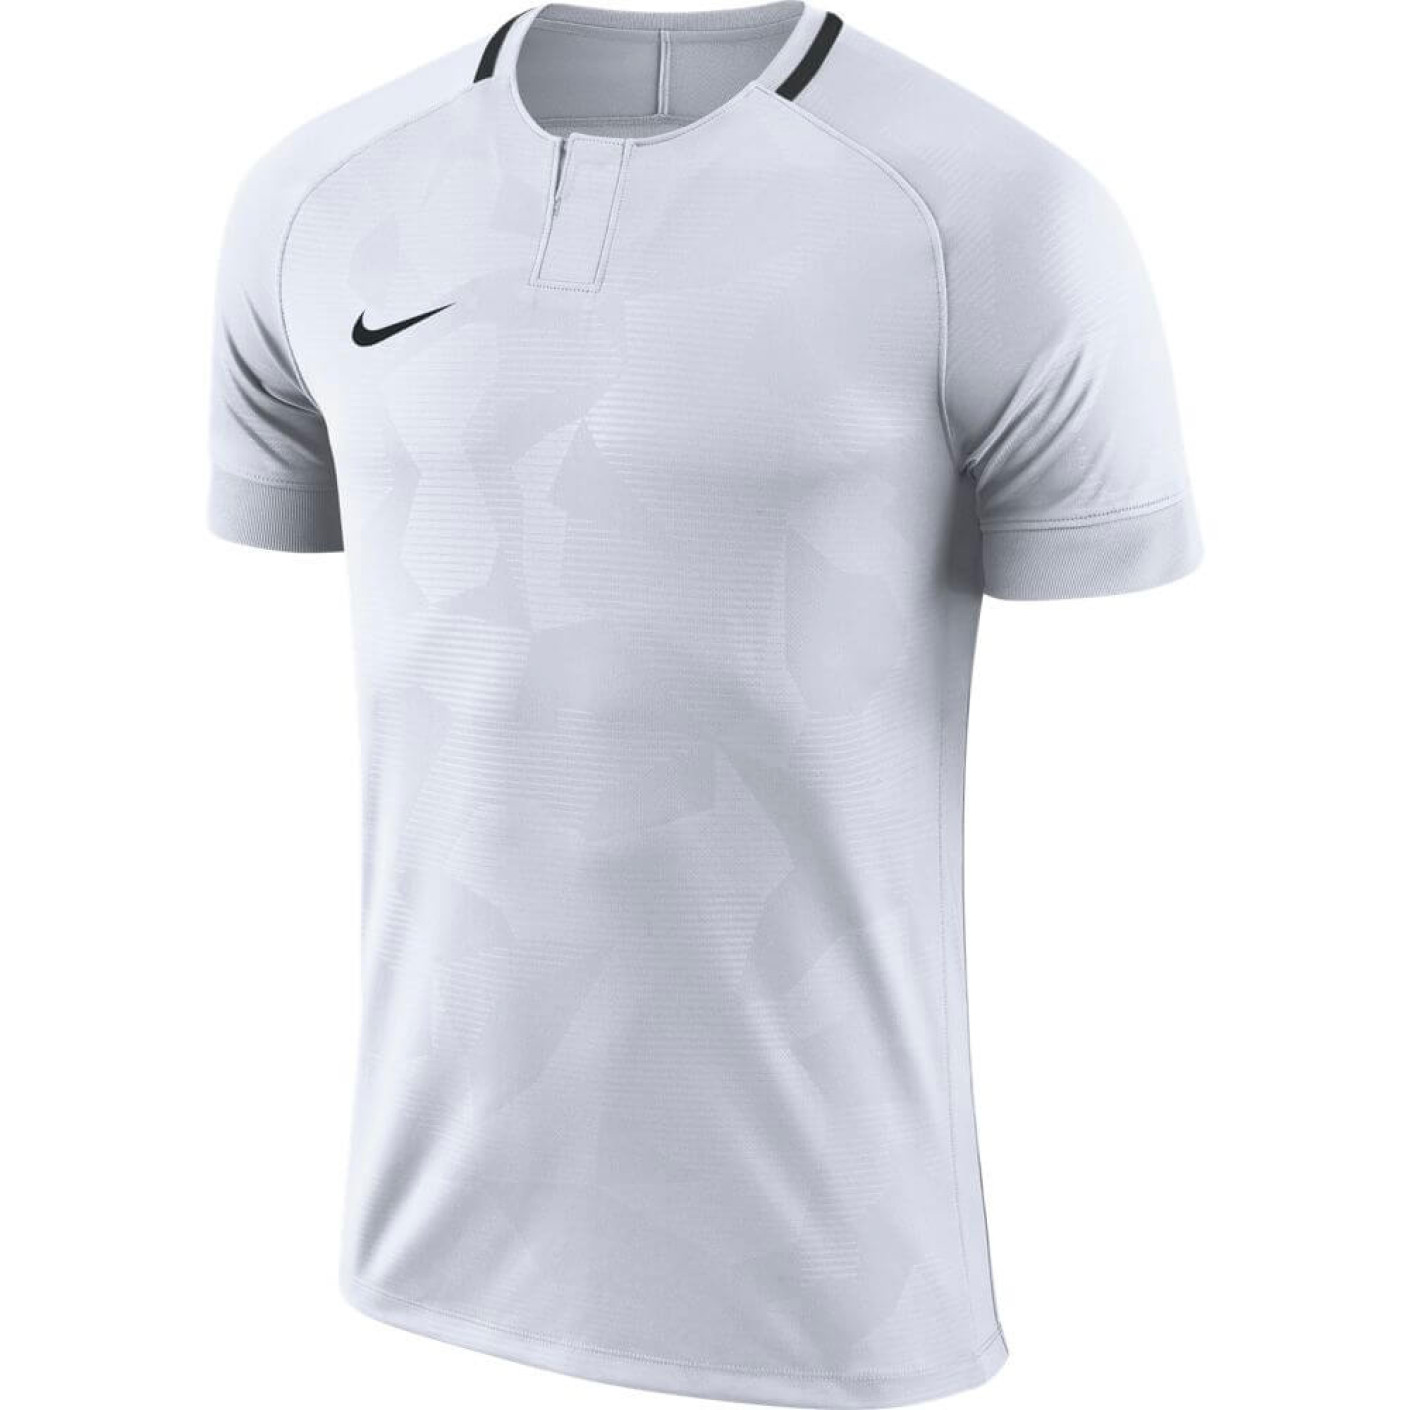 Nike Dry Challenge II Voetbalshirt White Black